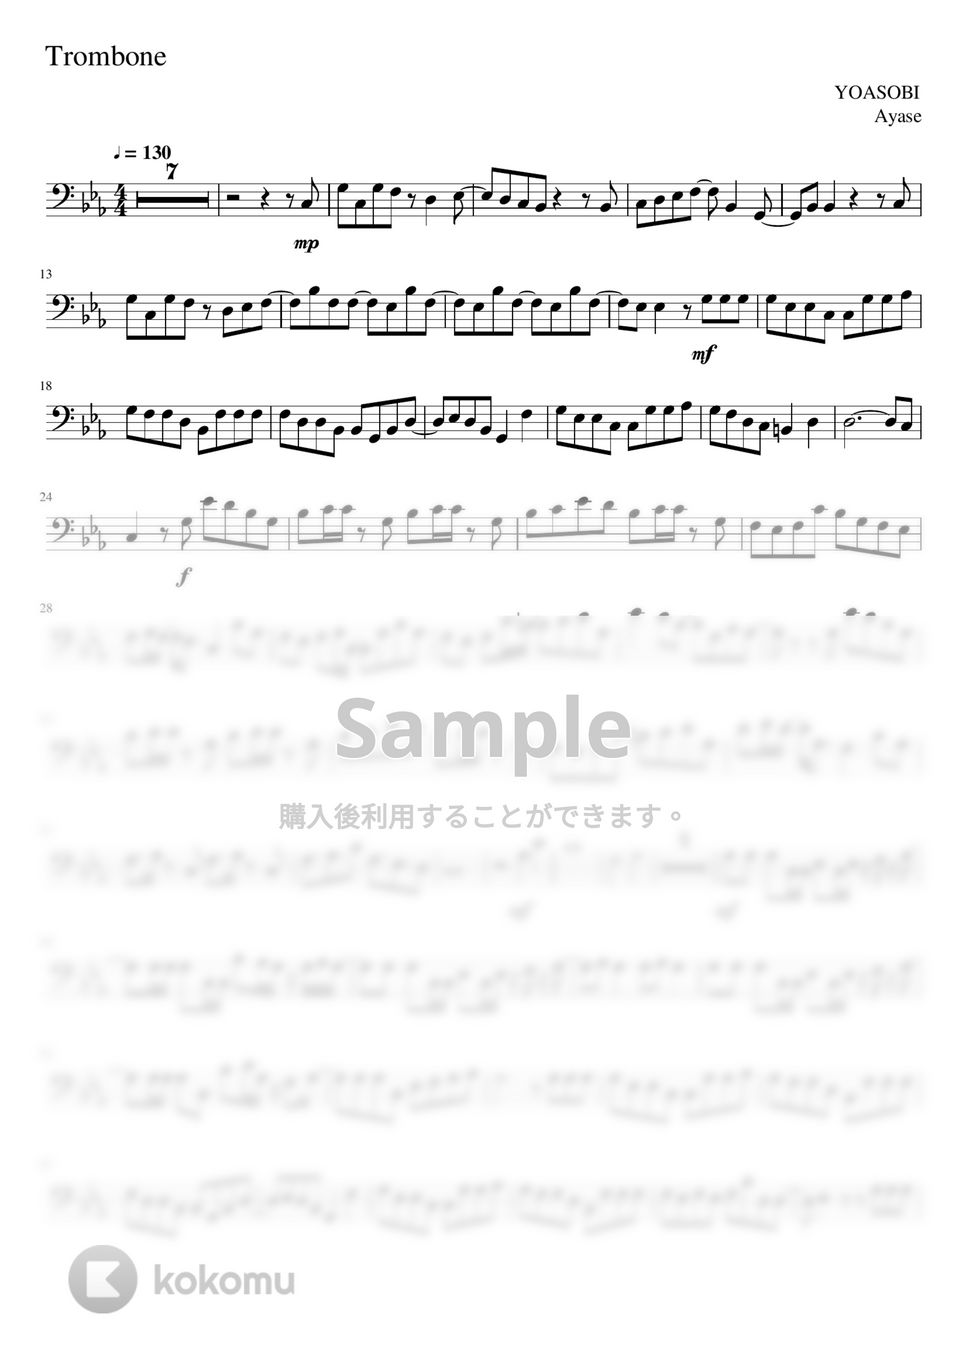 YOASOBI - ハルジオン (-Trombone Solo- 原キー) by Creampuff